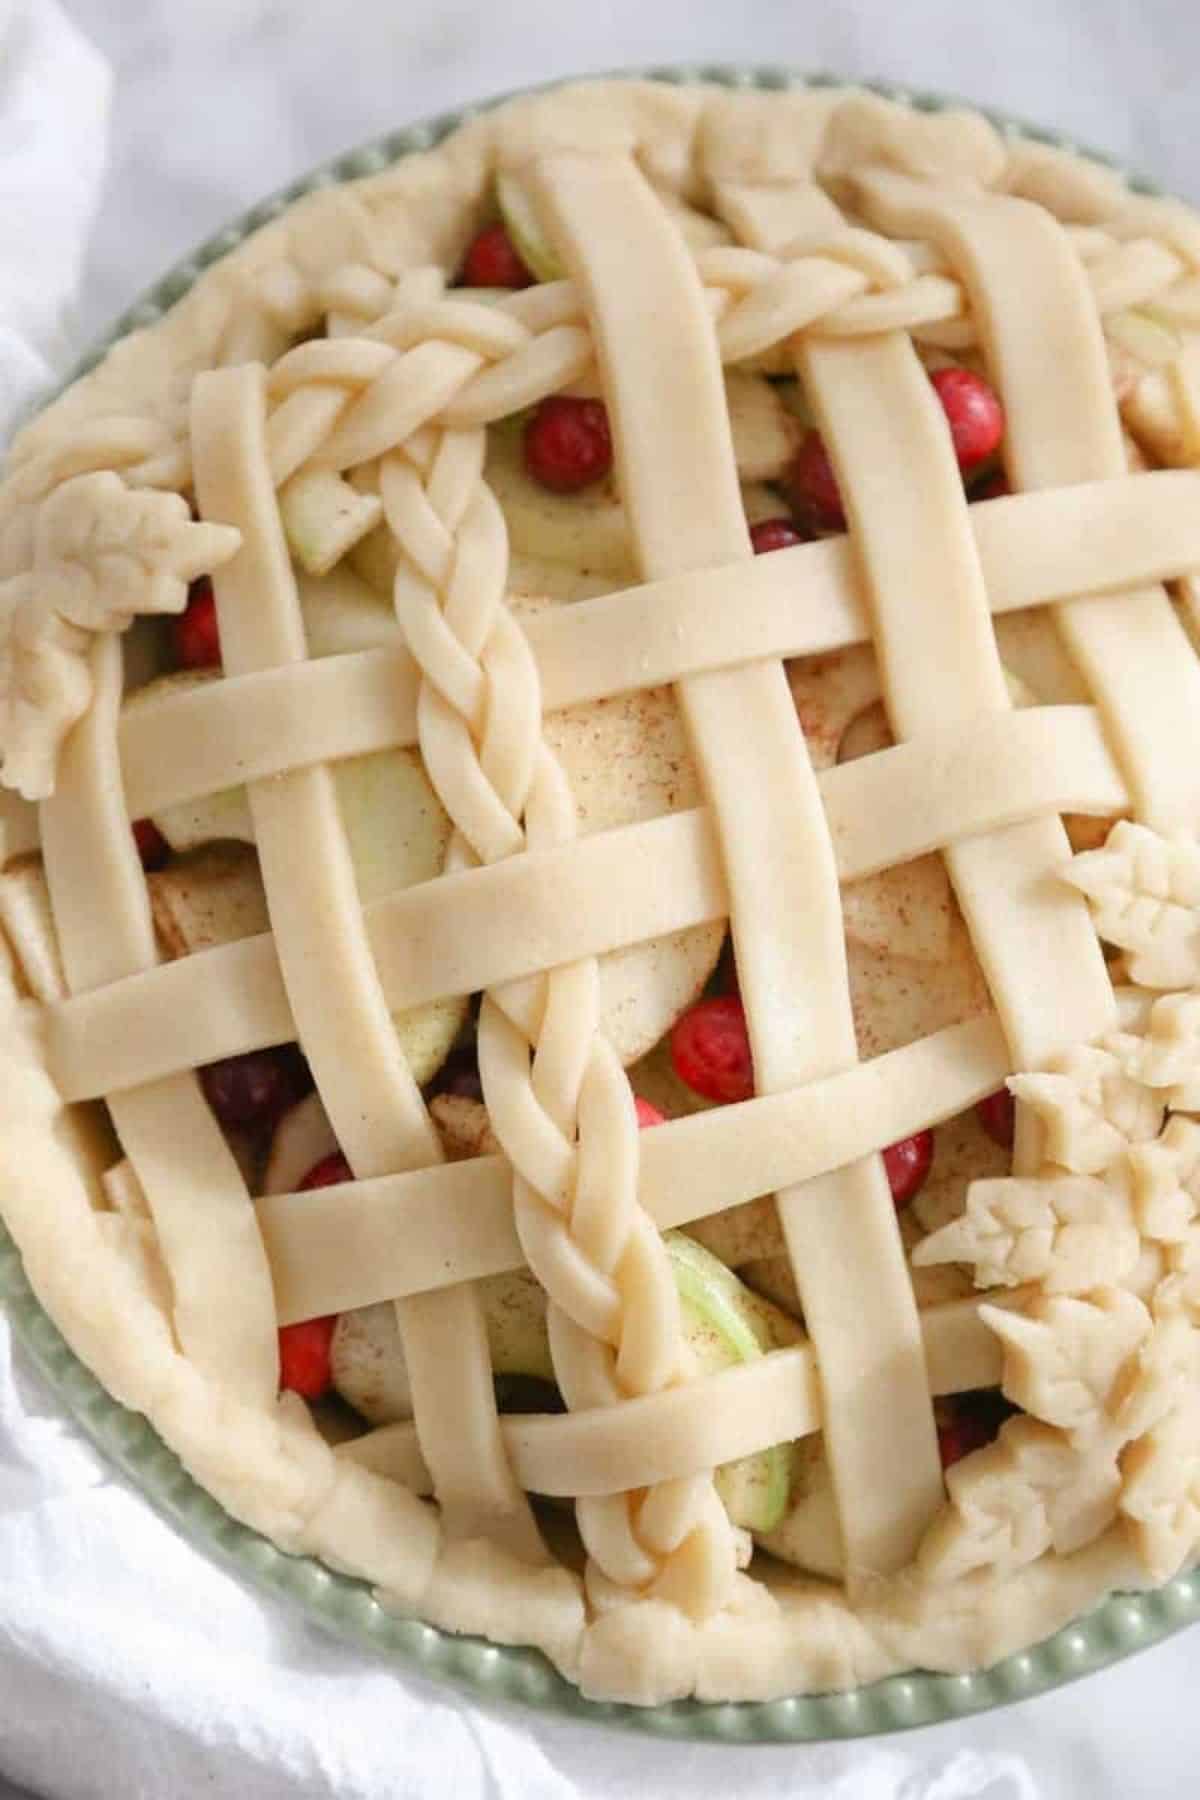 pre baked pie overhead